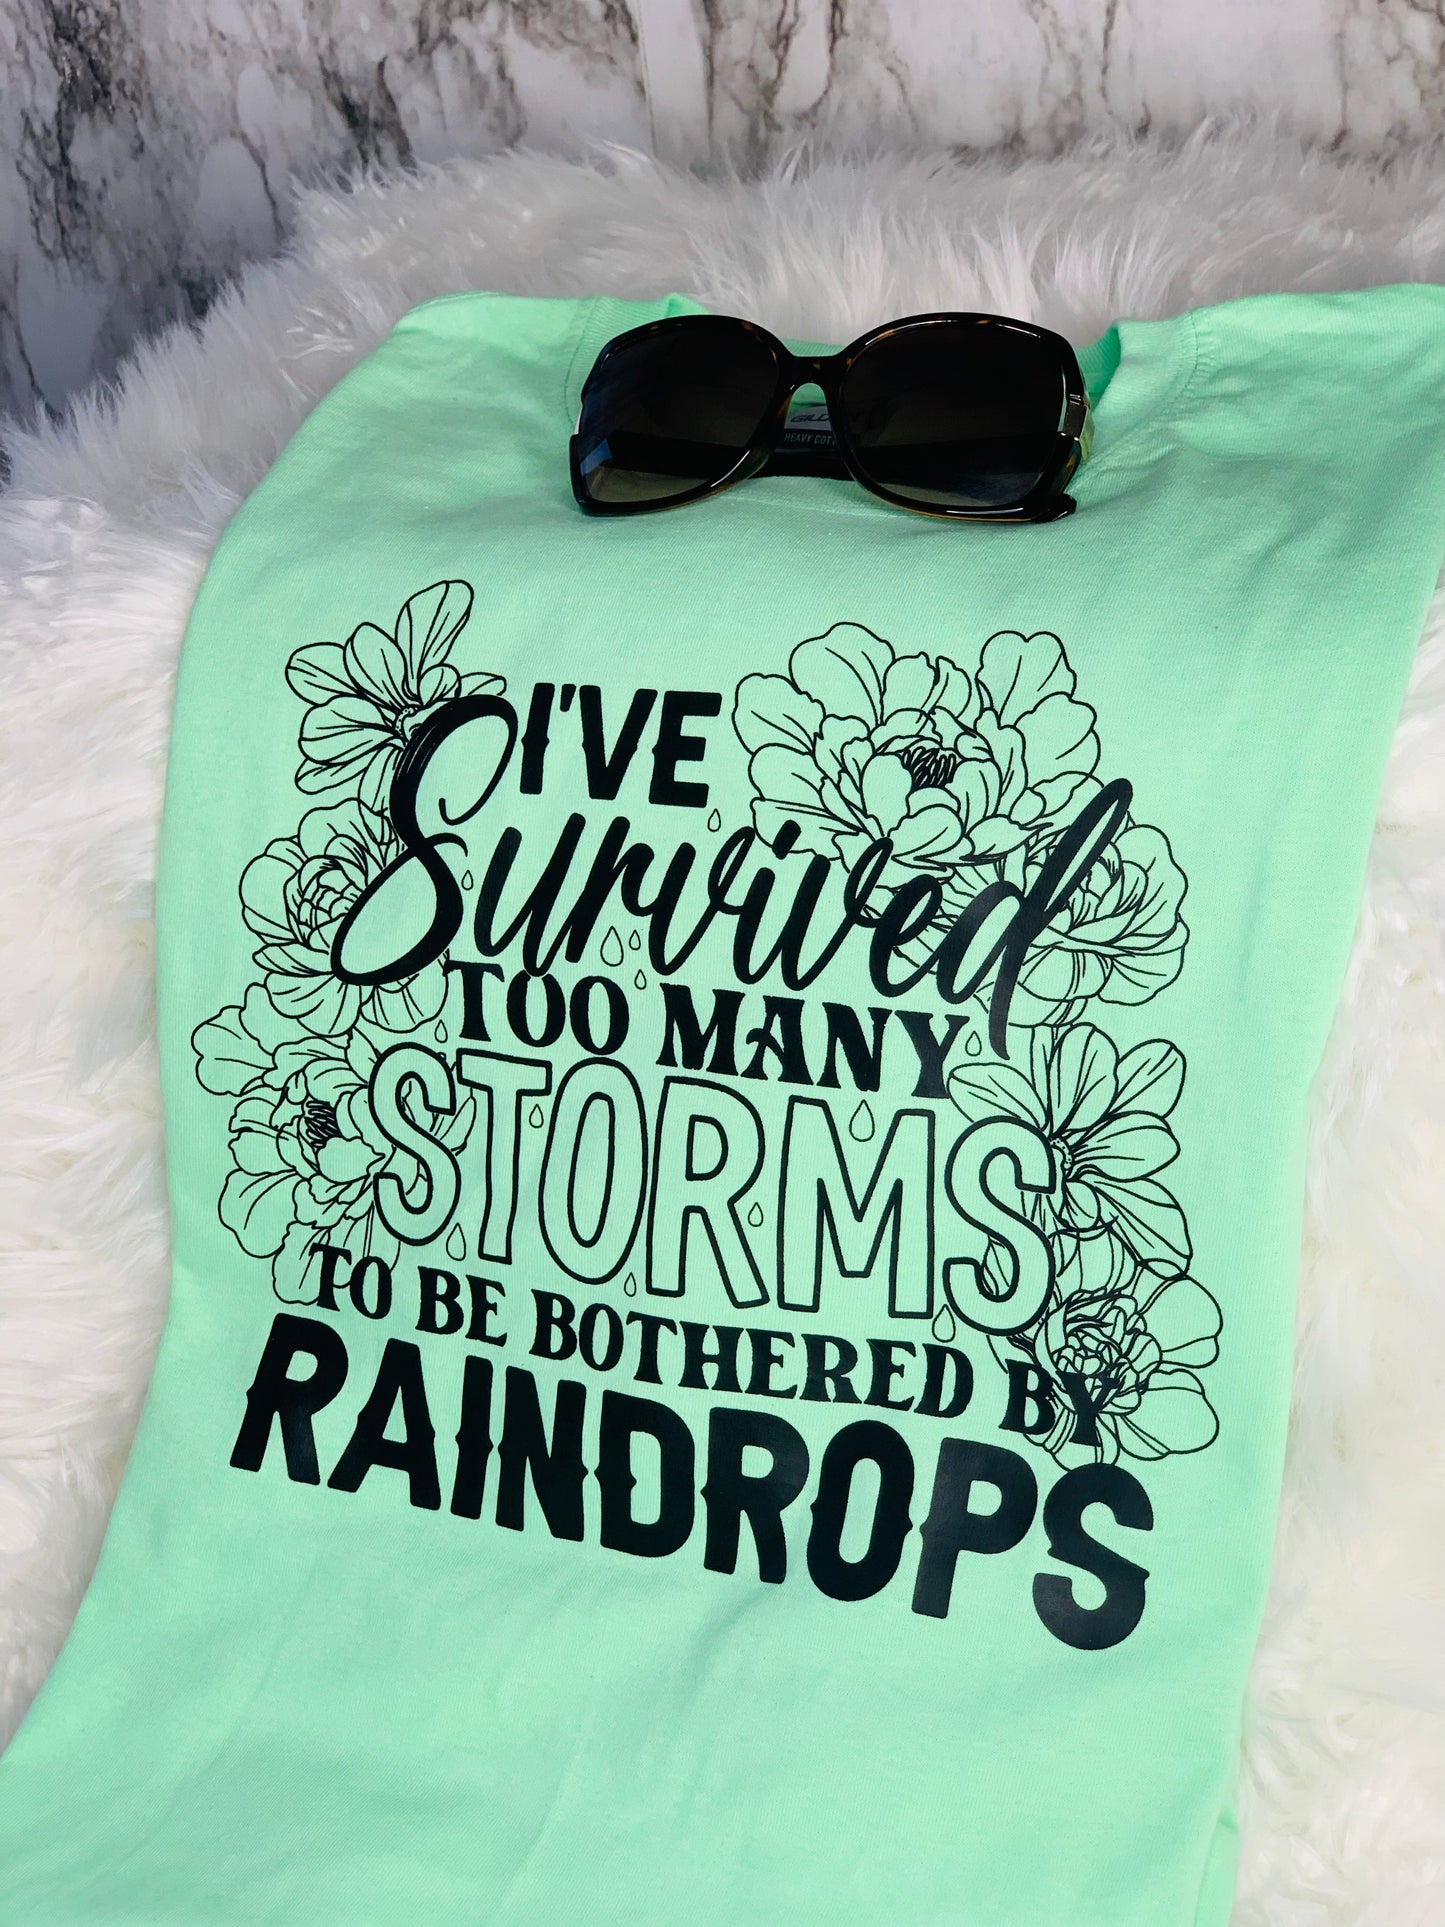 I’ve survived the storm T-shirt